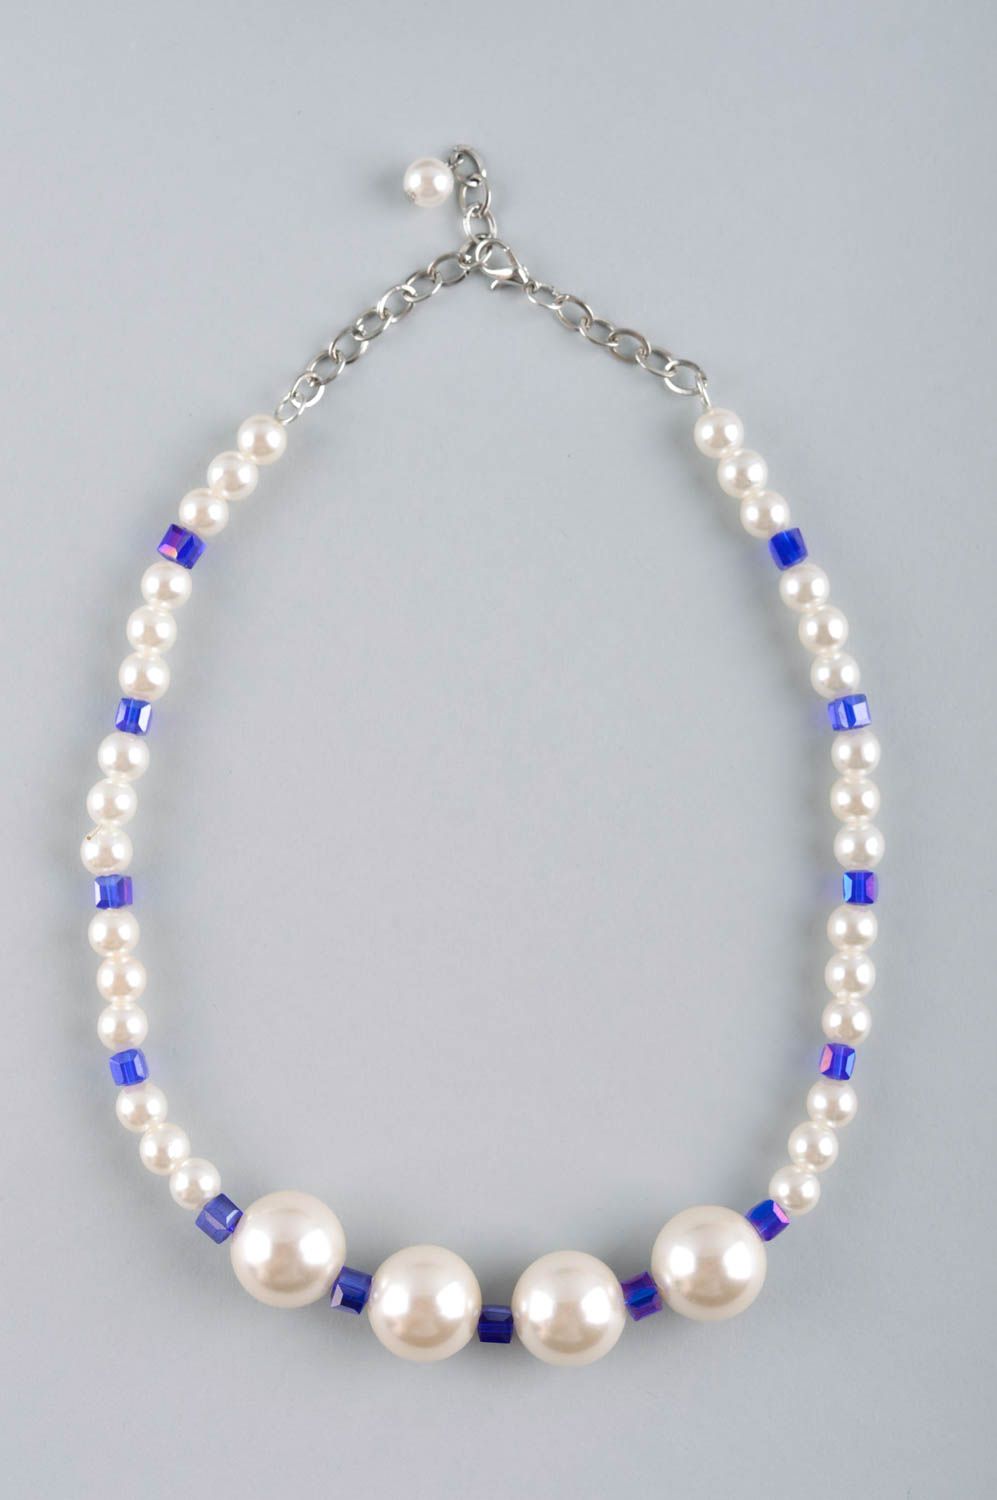 Stylish handmade beaded necklace artisan jewelry designs fashion accessories photo 3